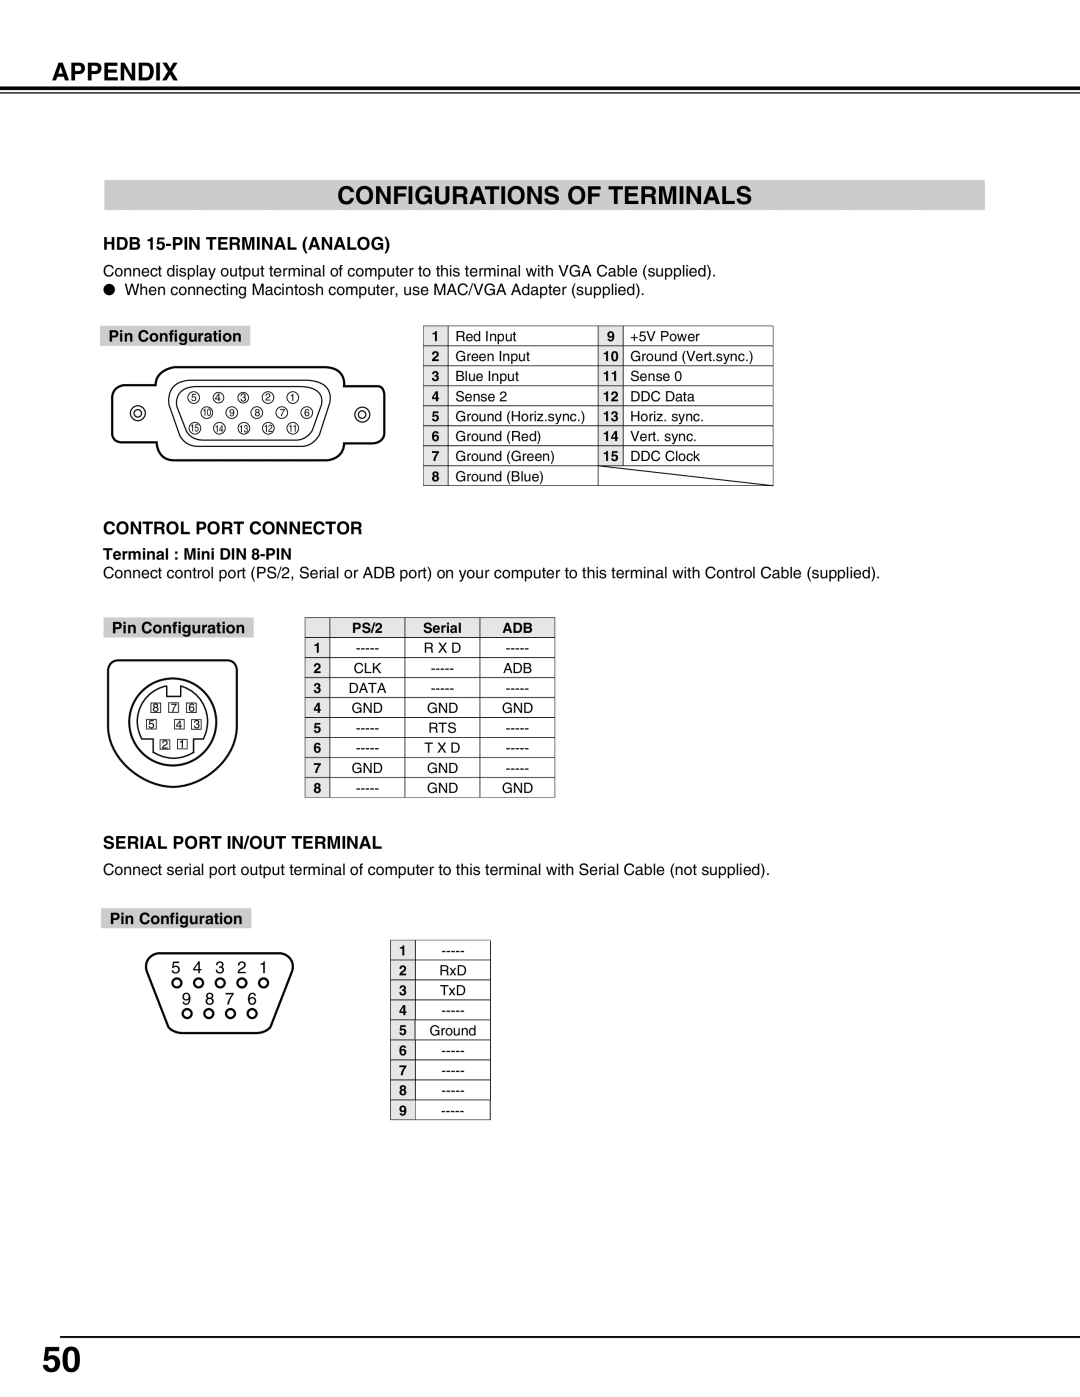 Christie Digital Systems 38-VIV302-01 Appendix Configurations Of Terminals, Pin Configuration, Terminal Mini DIN 8-PIN 